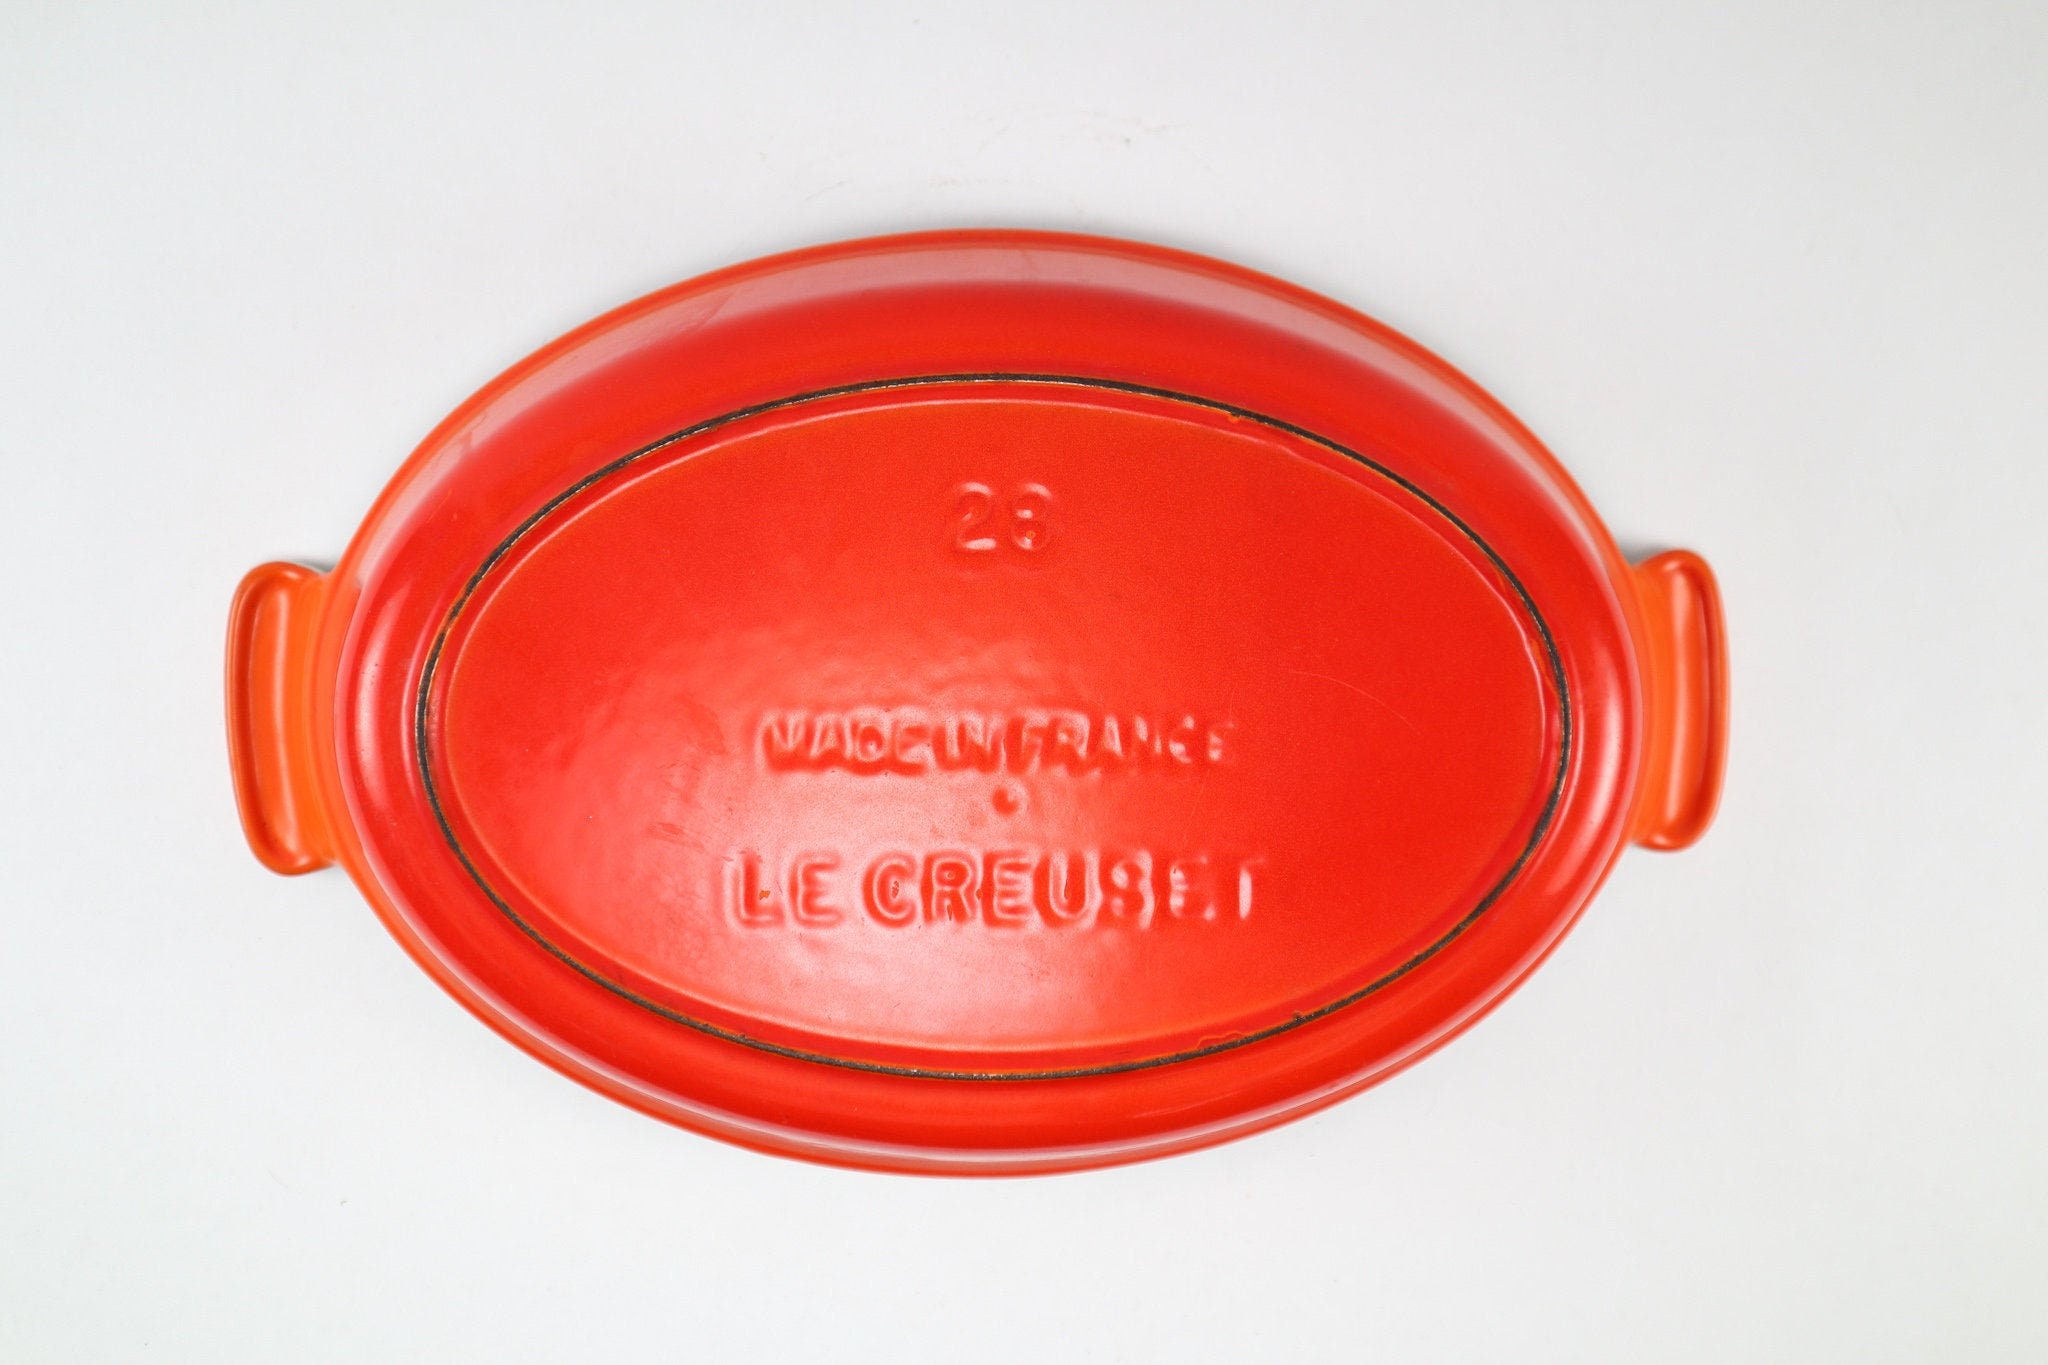 Le Creuset, Cast Iron Cookware, Bakeware & Accessories